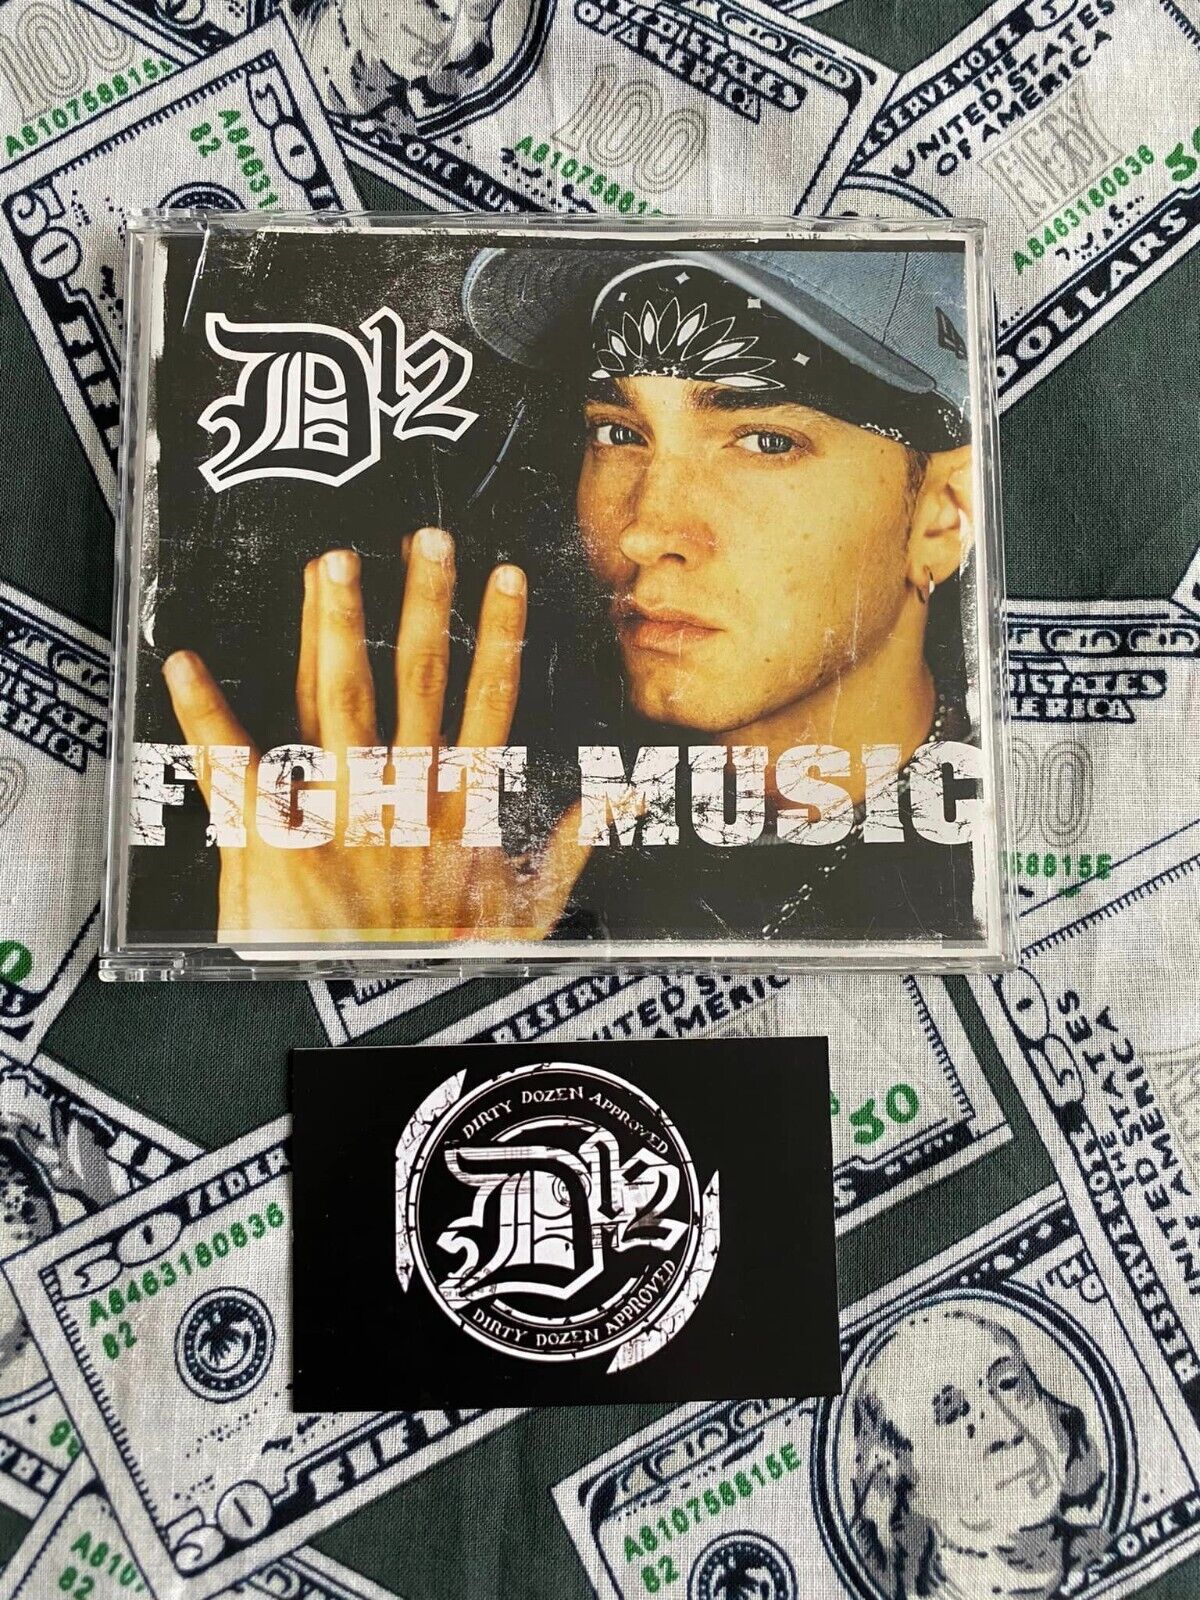 Eminem d12 fight music German Cover Eminem